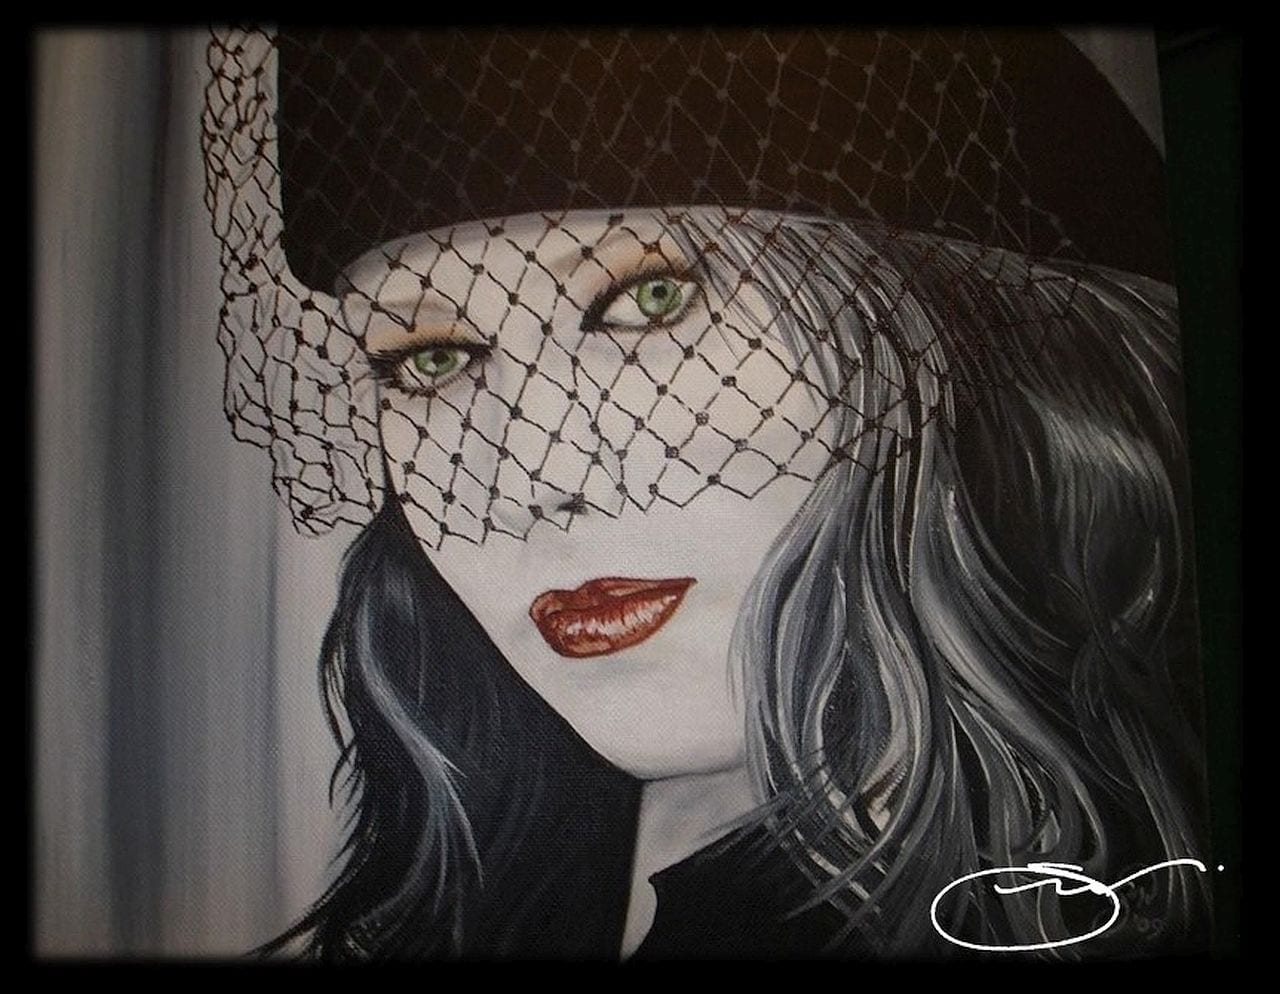 Acrylic painting of a veiled woman